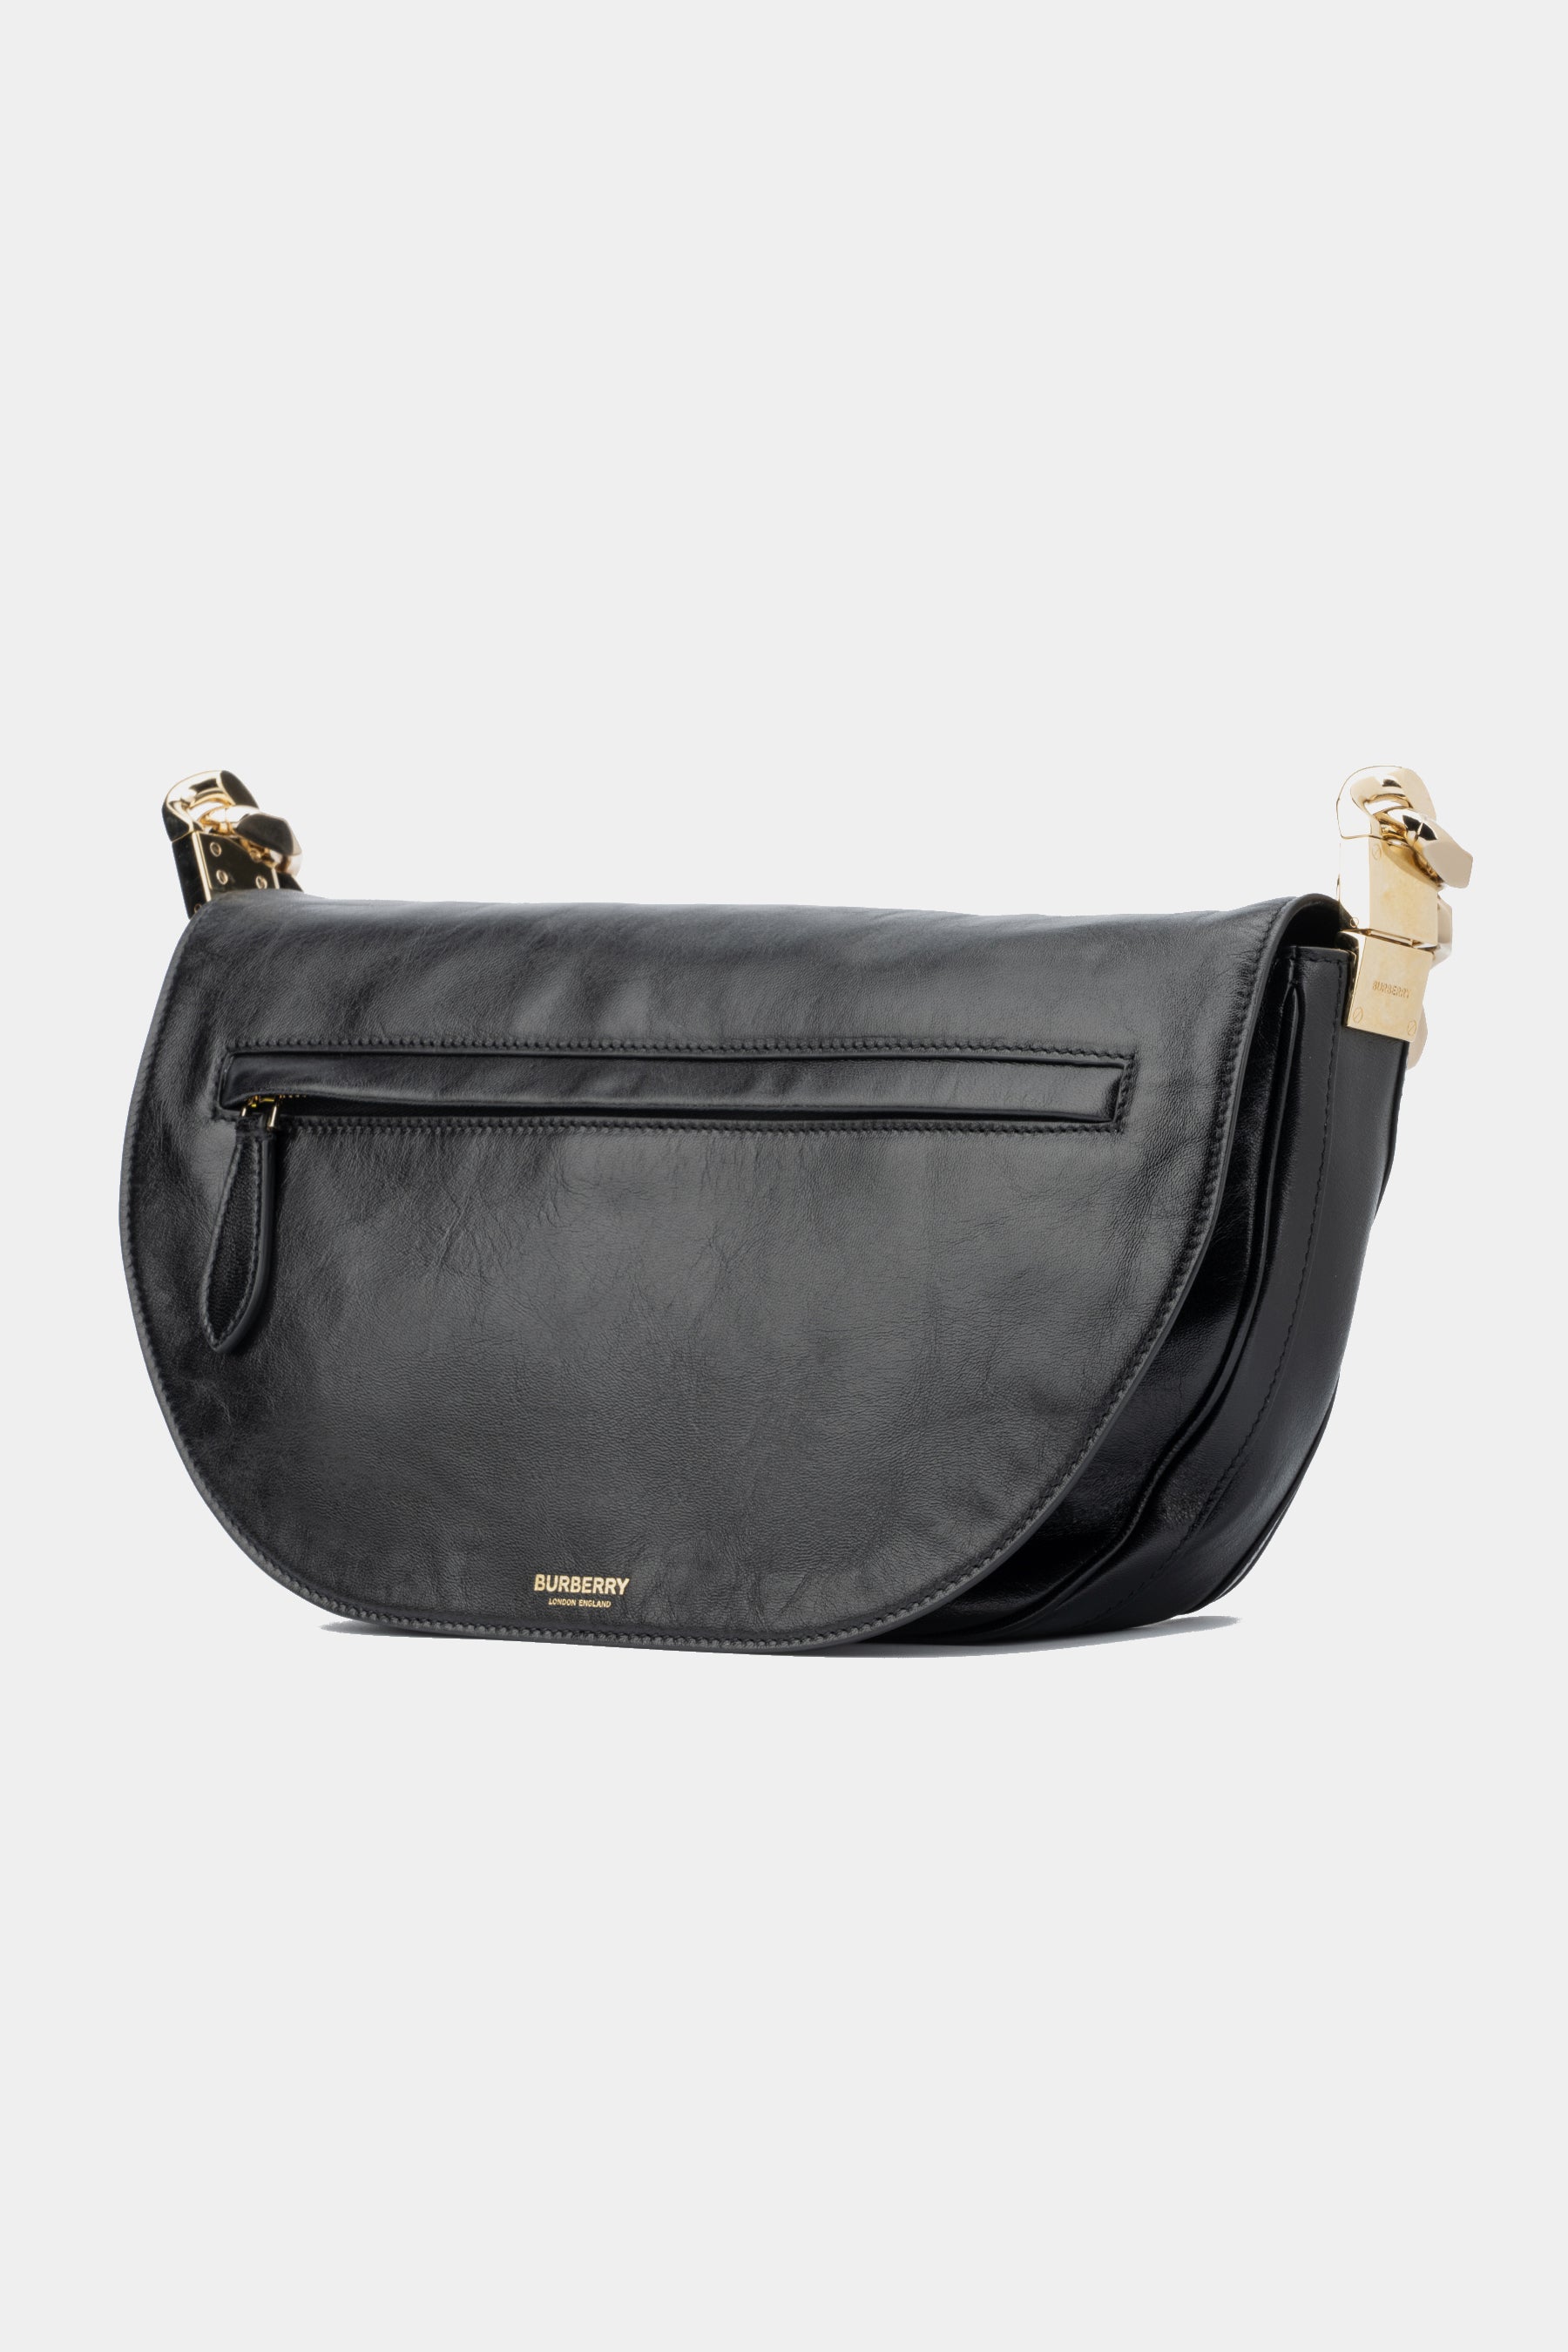 Burberry Olympia Zip Chain Shoulder Bag, Black